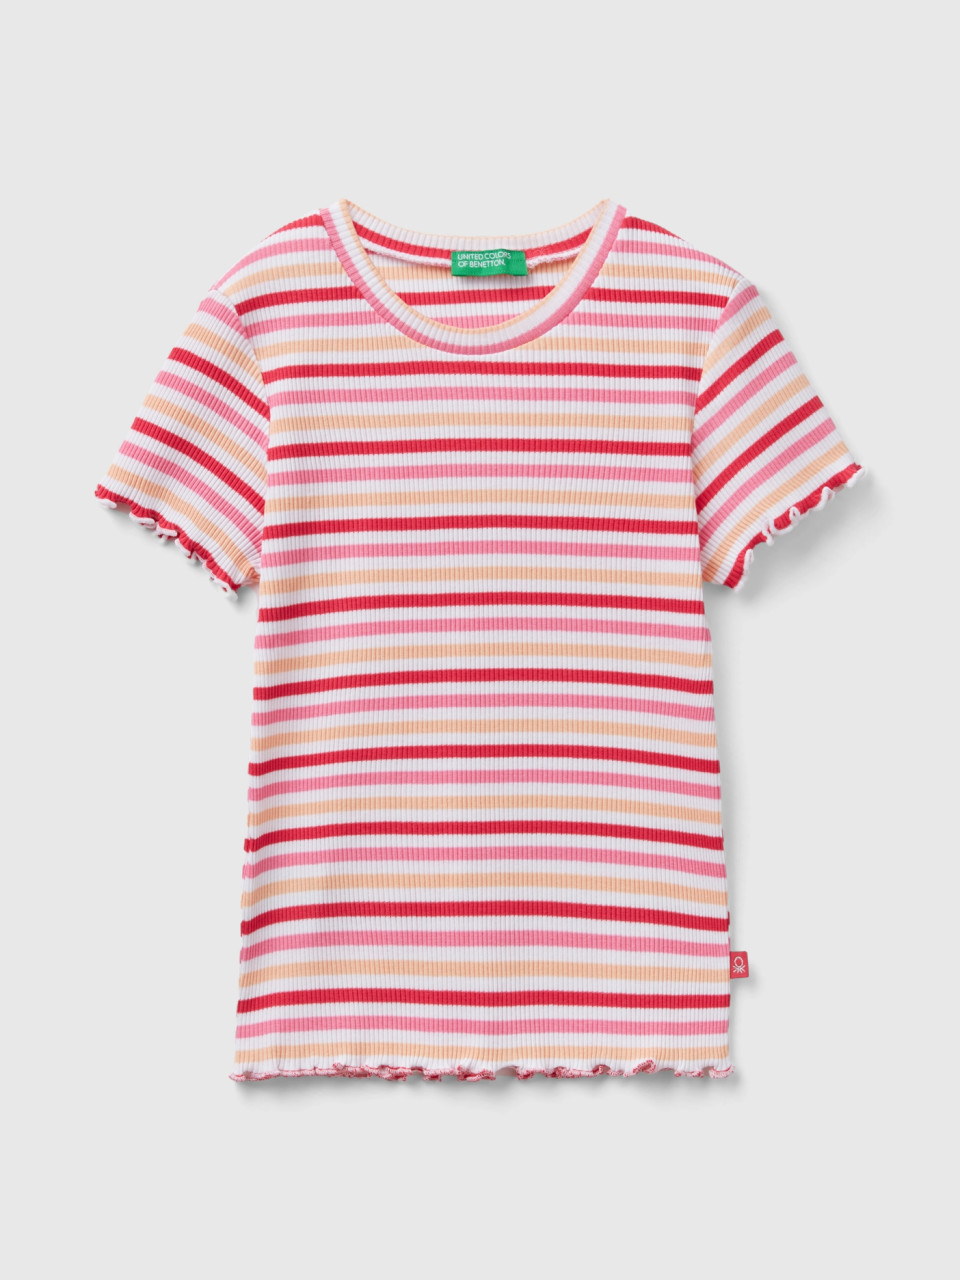 Benetton, Striped Stretch Cotton T-shirt, Multi-color, Kids